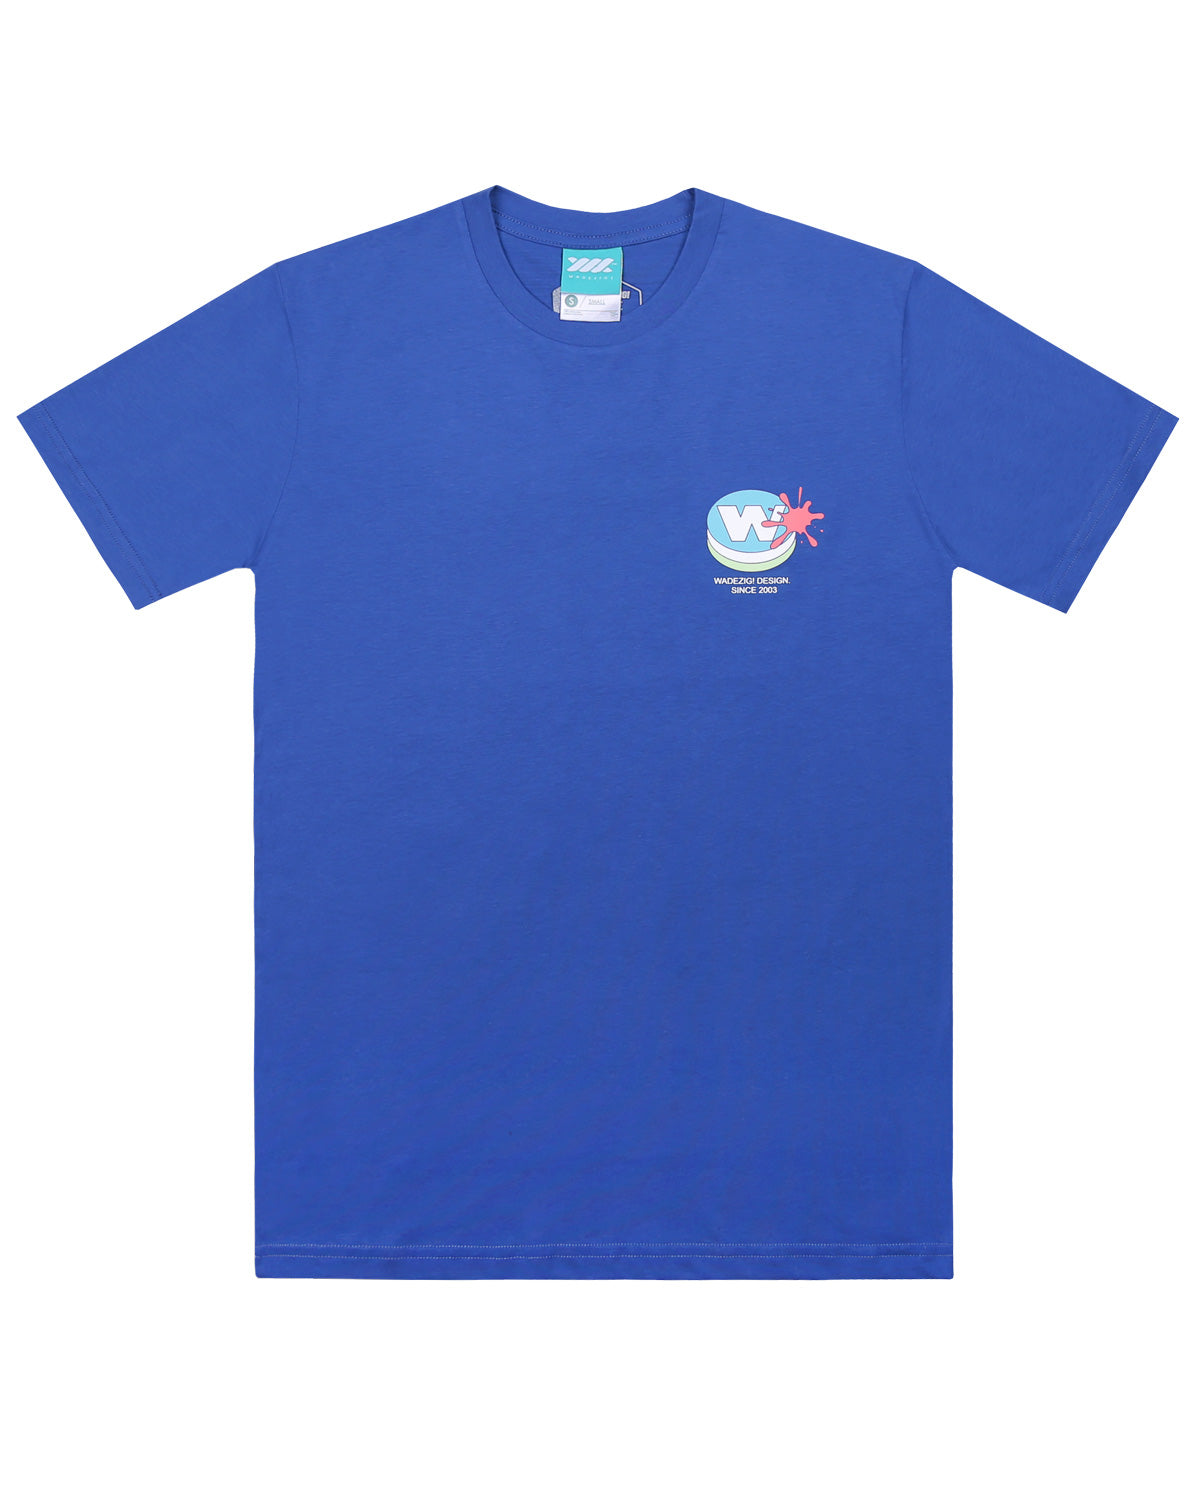 Wadezig! Tshirt - Not Bad Blue